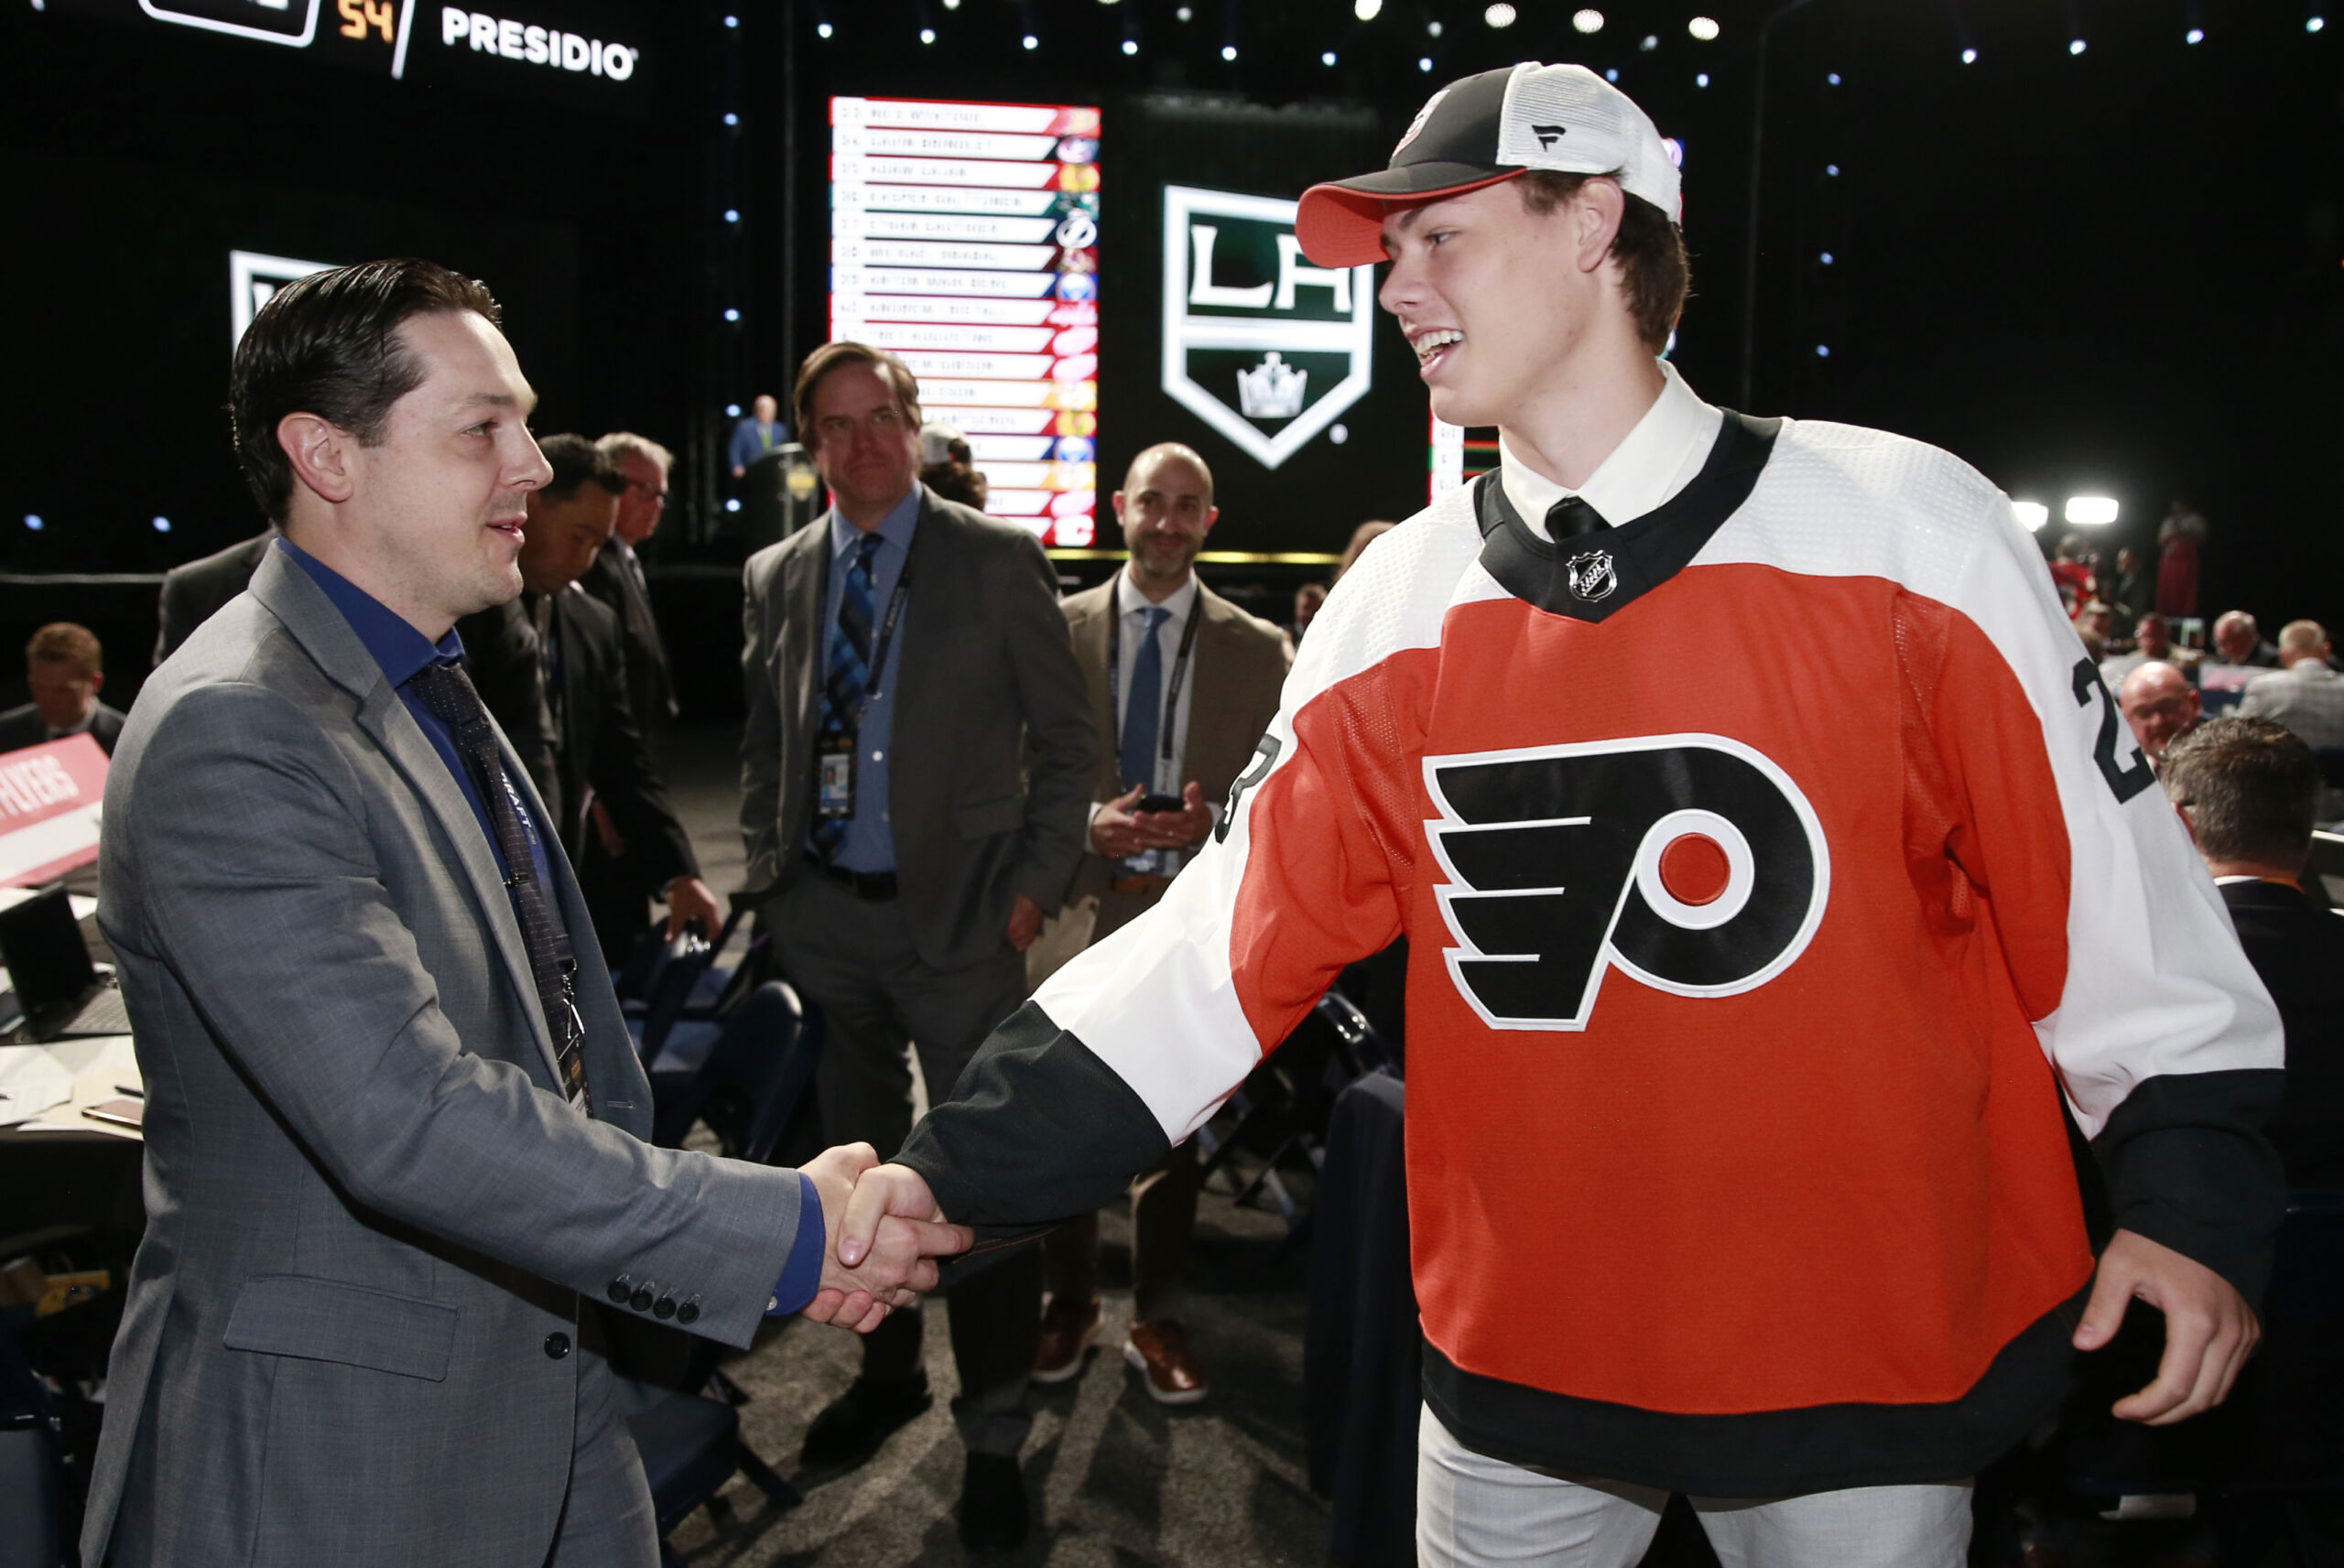 Top 5 Philadelphia Flyers draft picks of all time